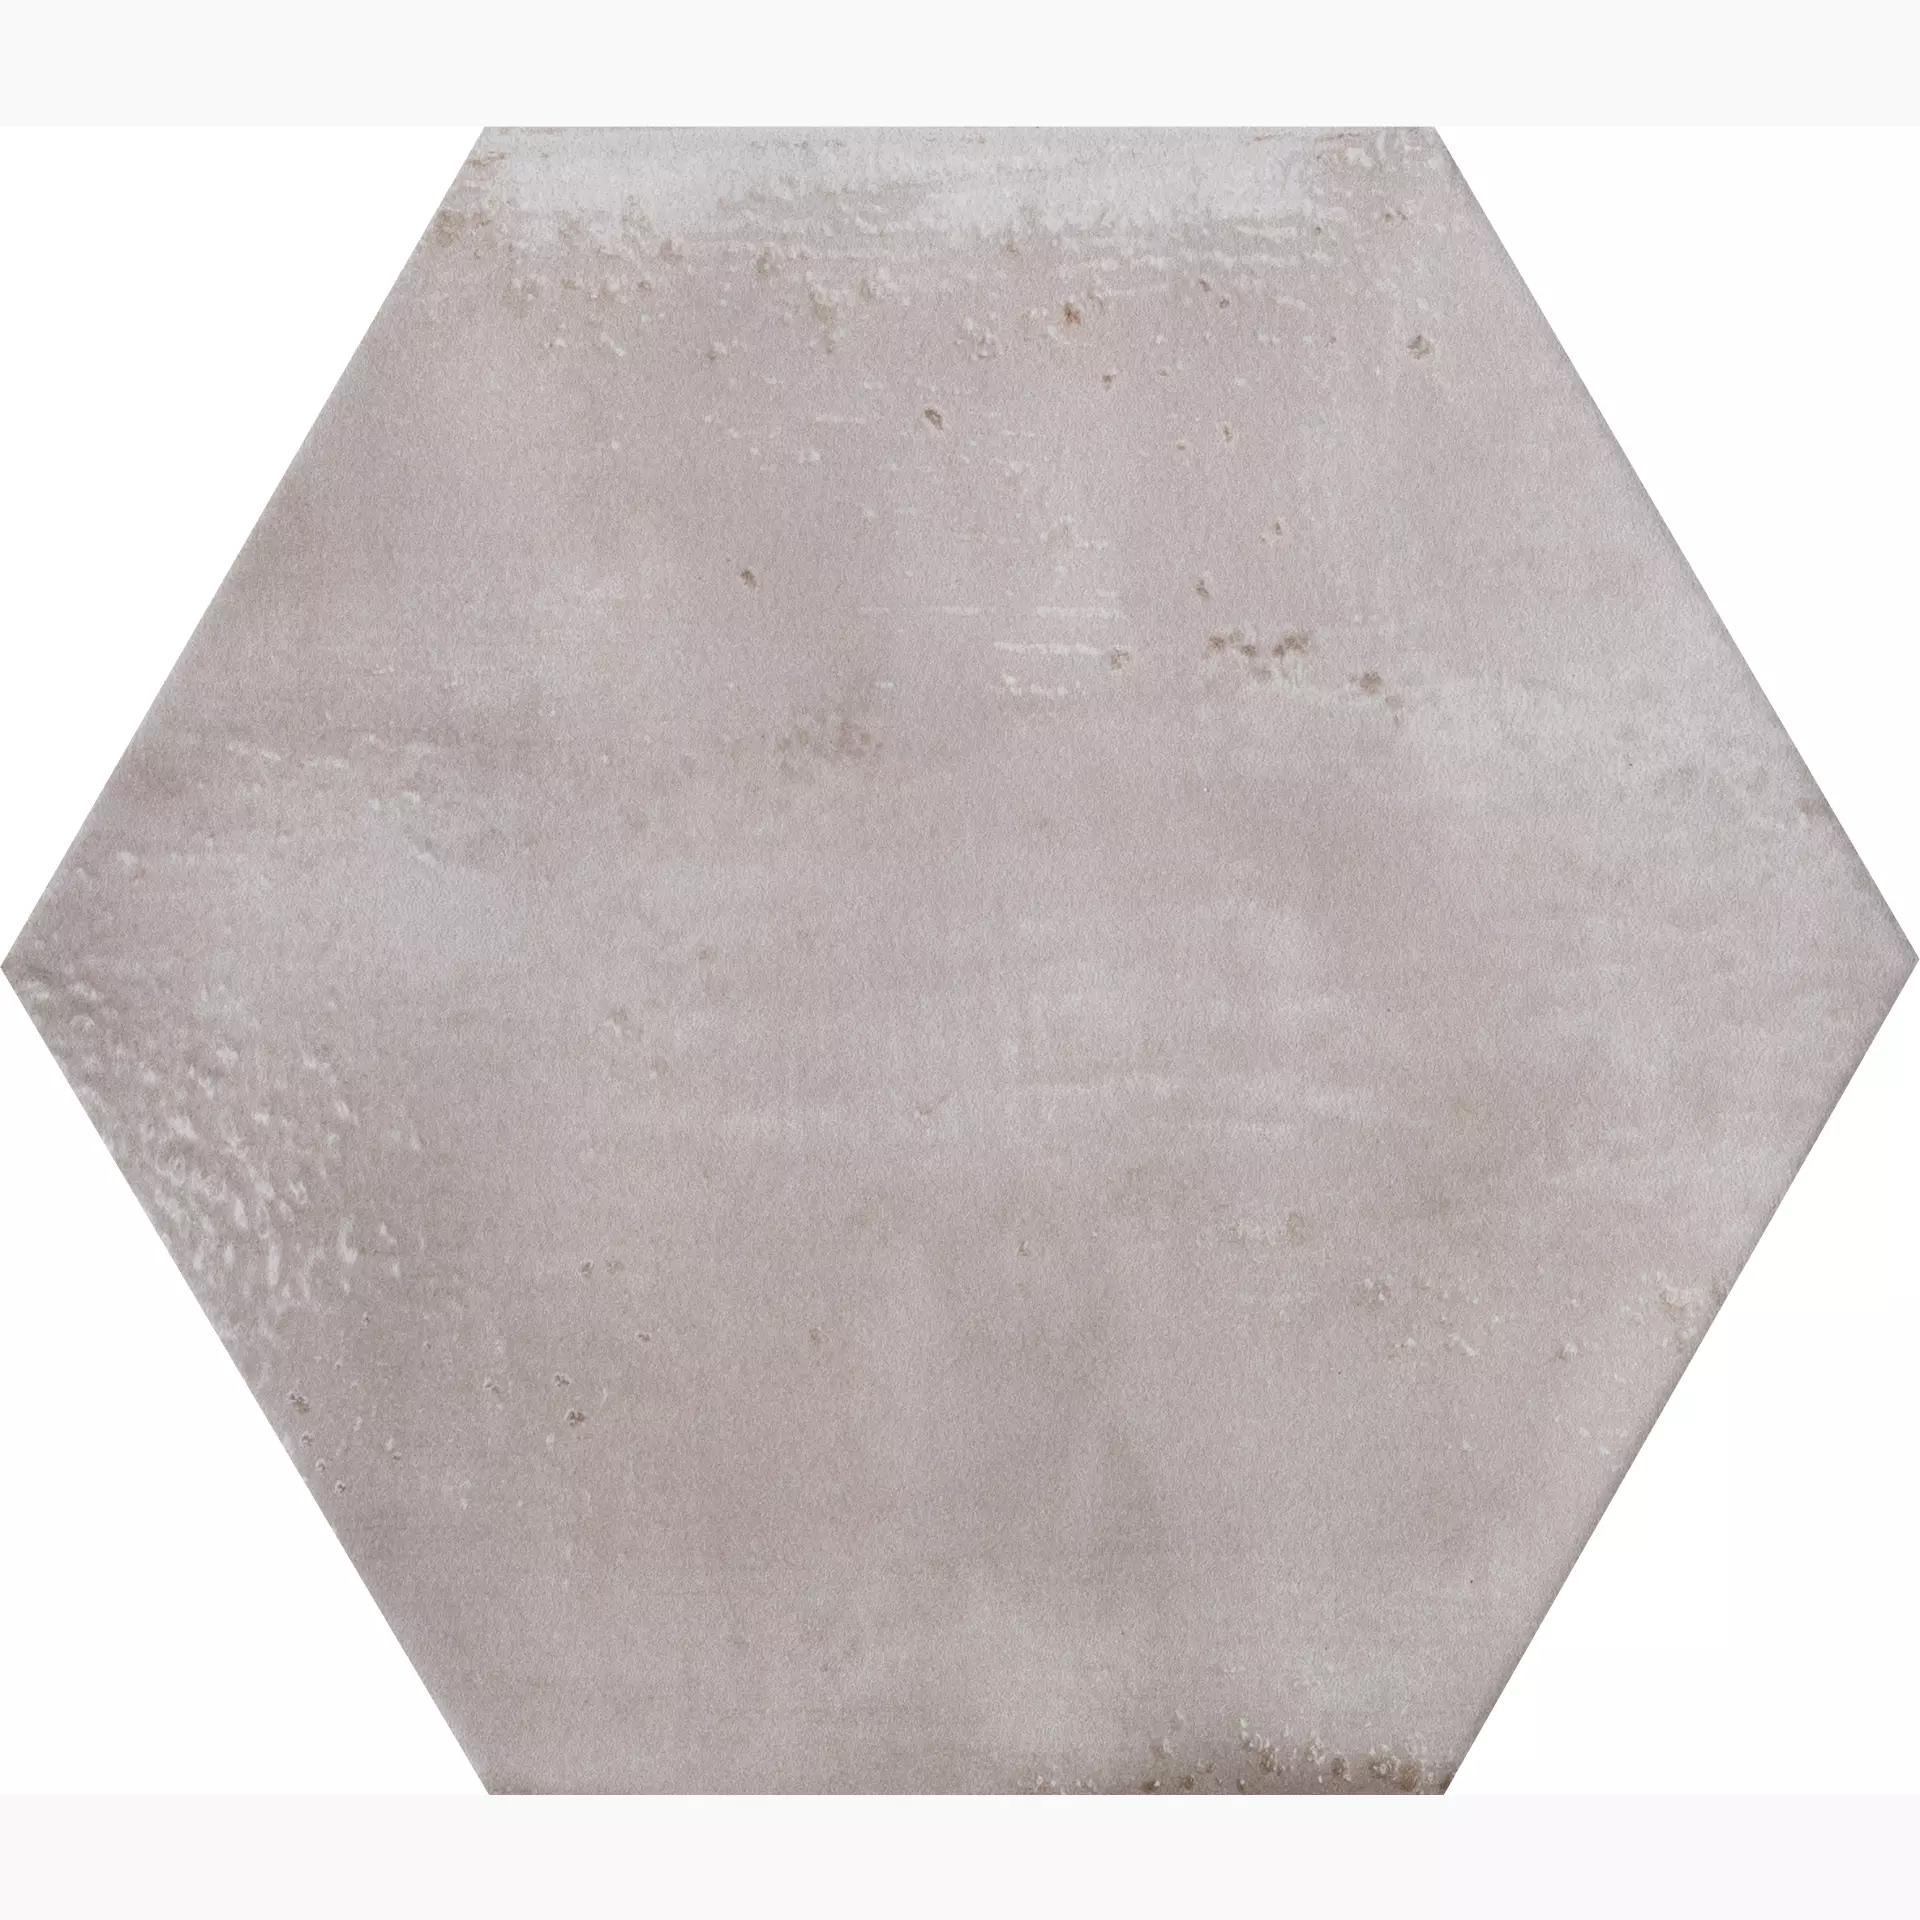 CIR Fuoritono Beige Opaco Hexagon 1072707 24x27,7cm 10mm